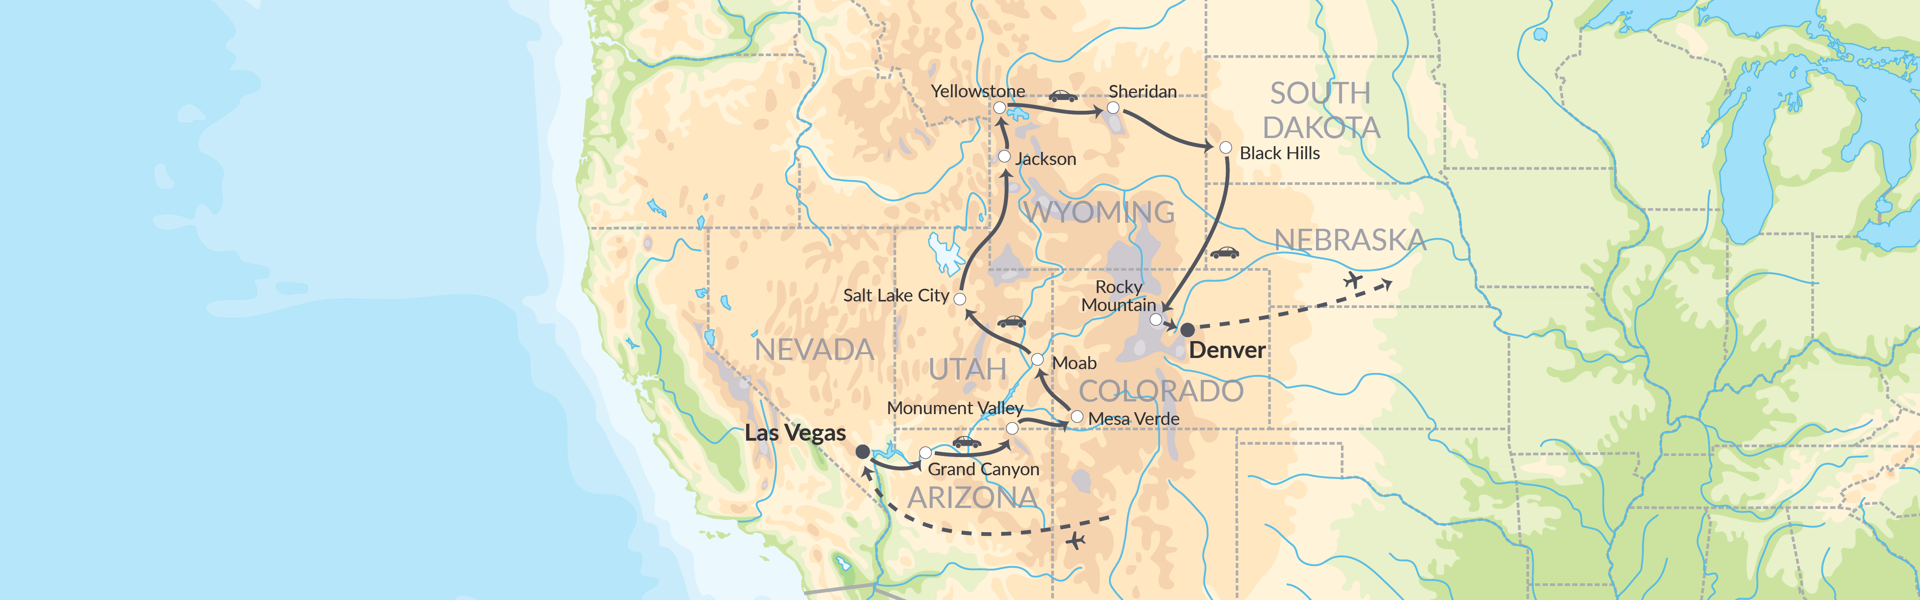 5249 Unikke Nationalparker Fra Las Vegas Til Denver